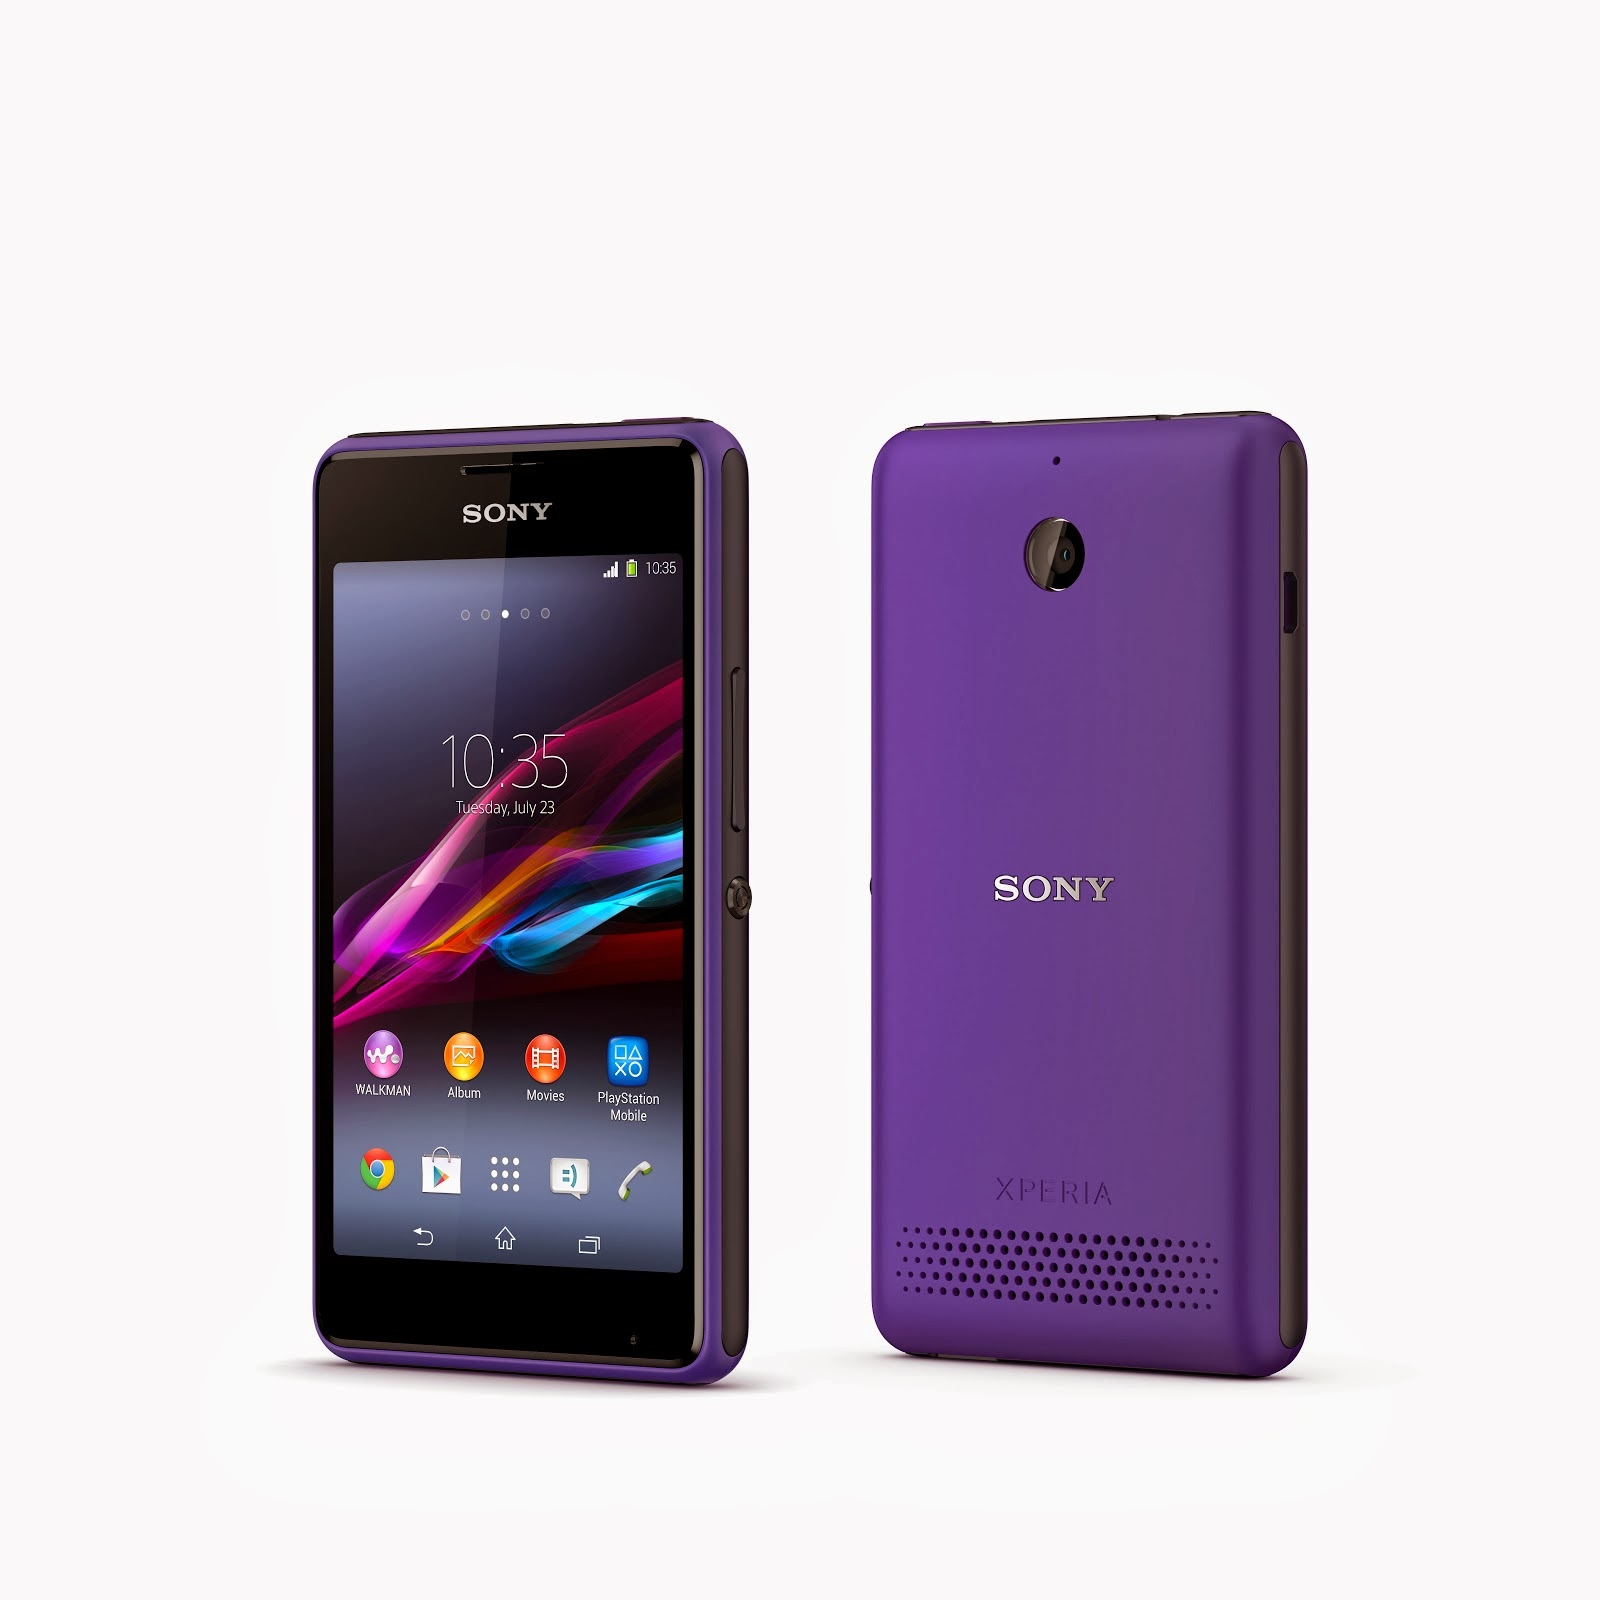 Spesifikasi dan Harga Sony Xperia E1 dan E1 Dual Android dengan Speaker 100dB